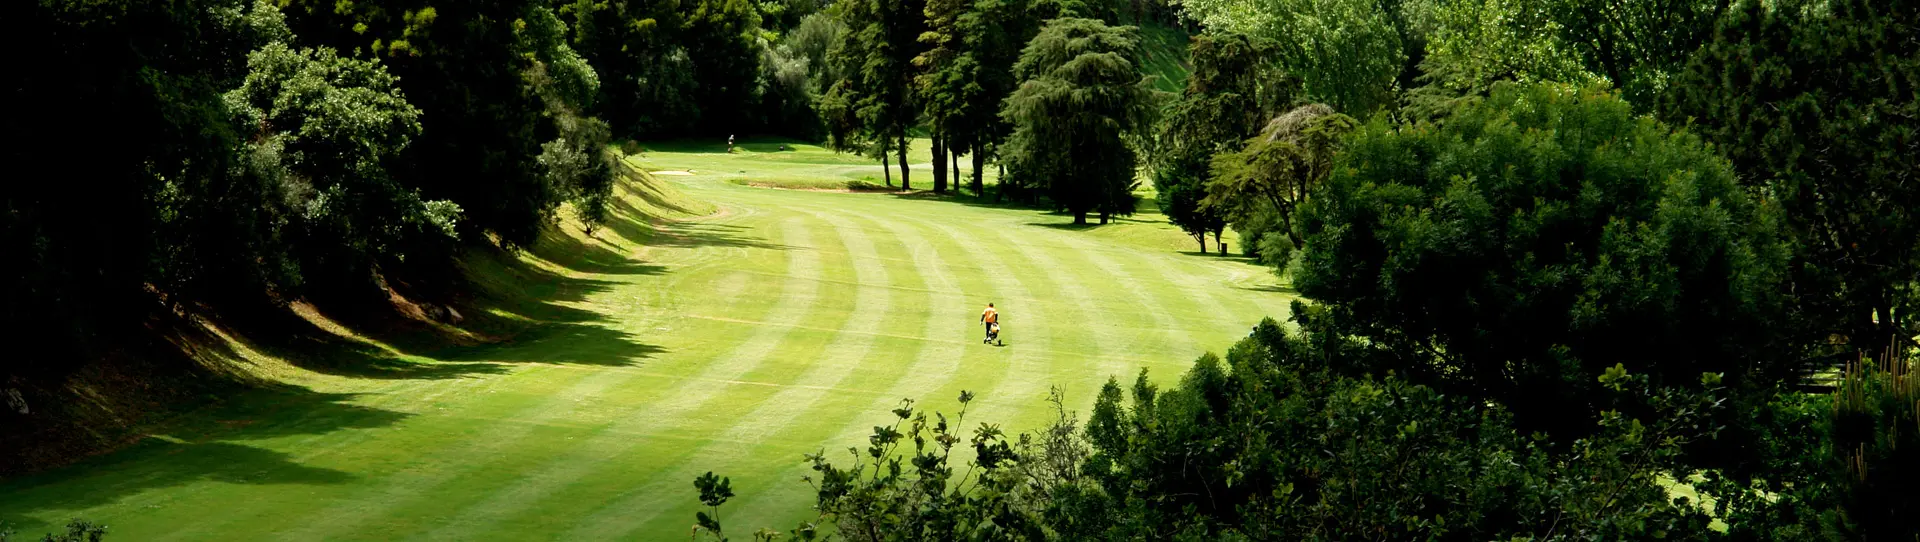 Portugal golf holidays - Belas Clube de Campo & Lisbon Sports Club - Photo 3